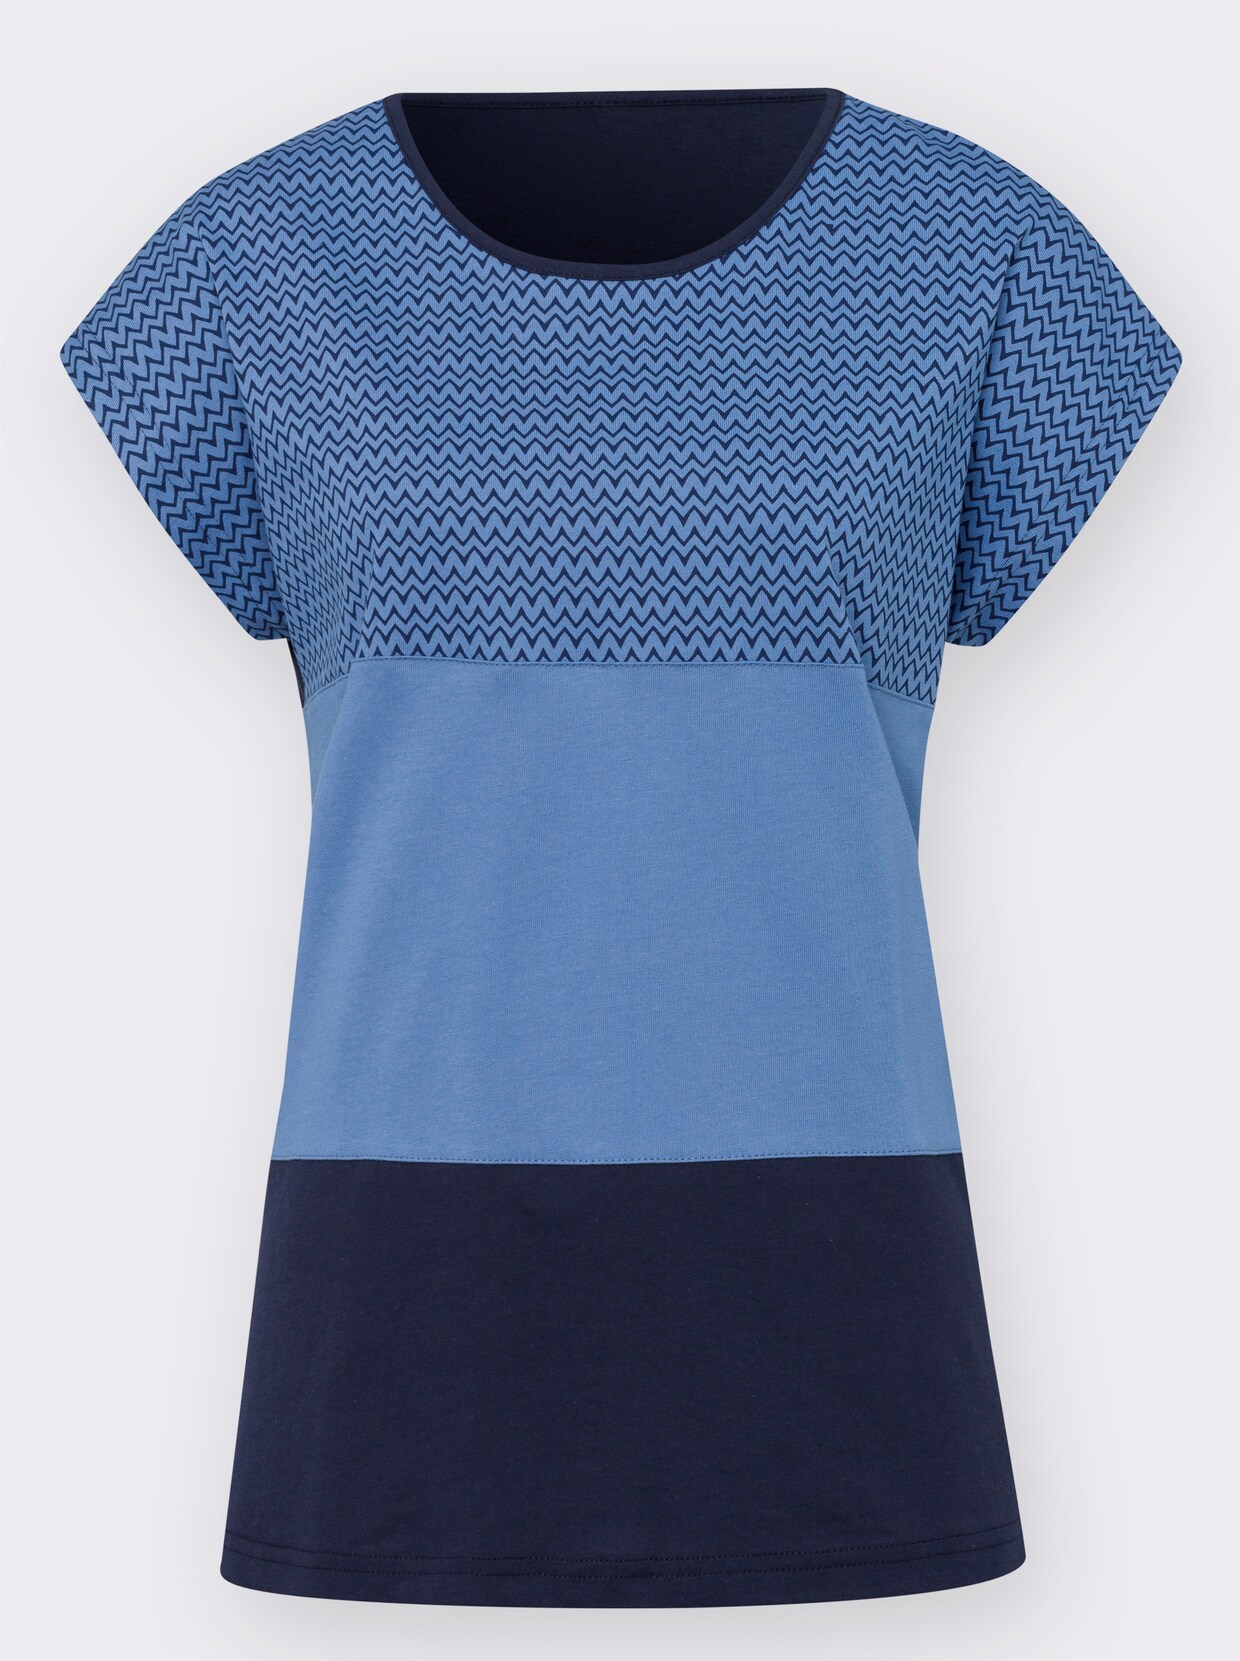 Tričko s krátkým rukávem - chrpově modrá-vzor